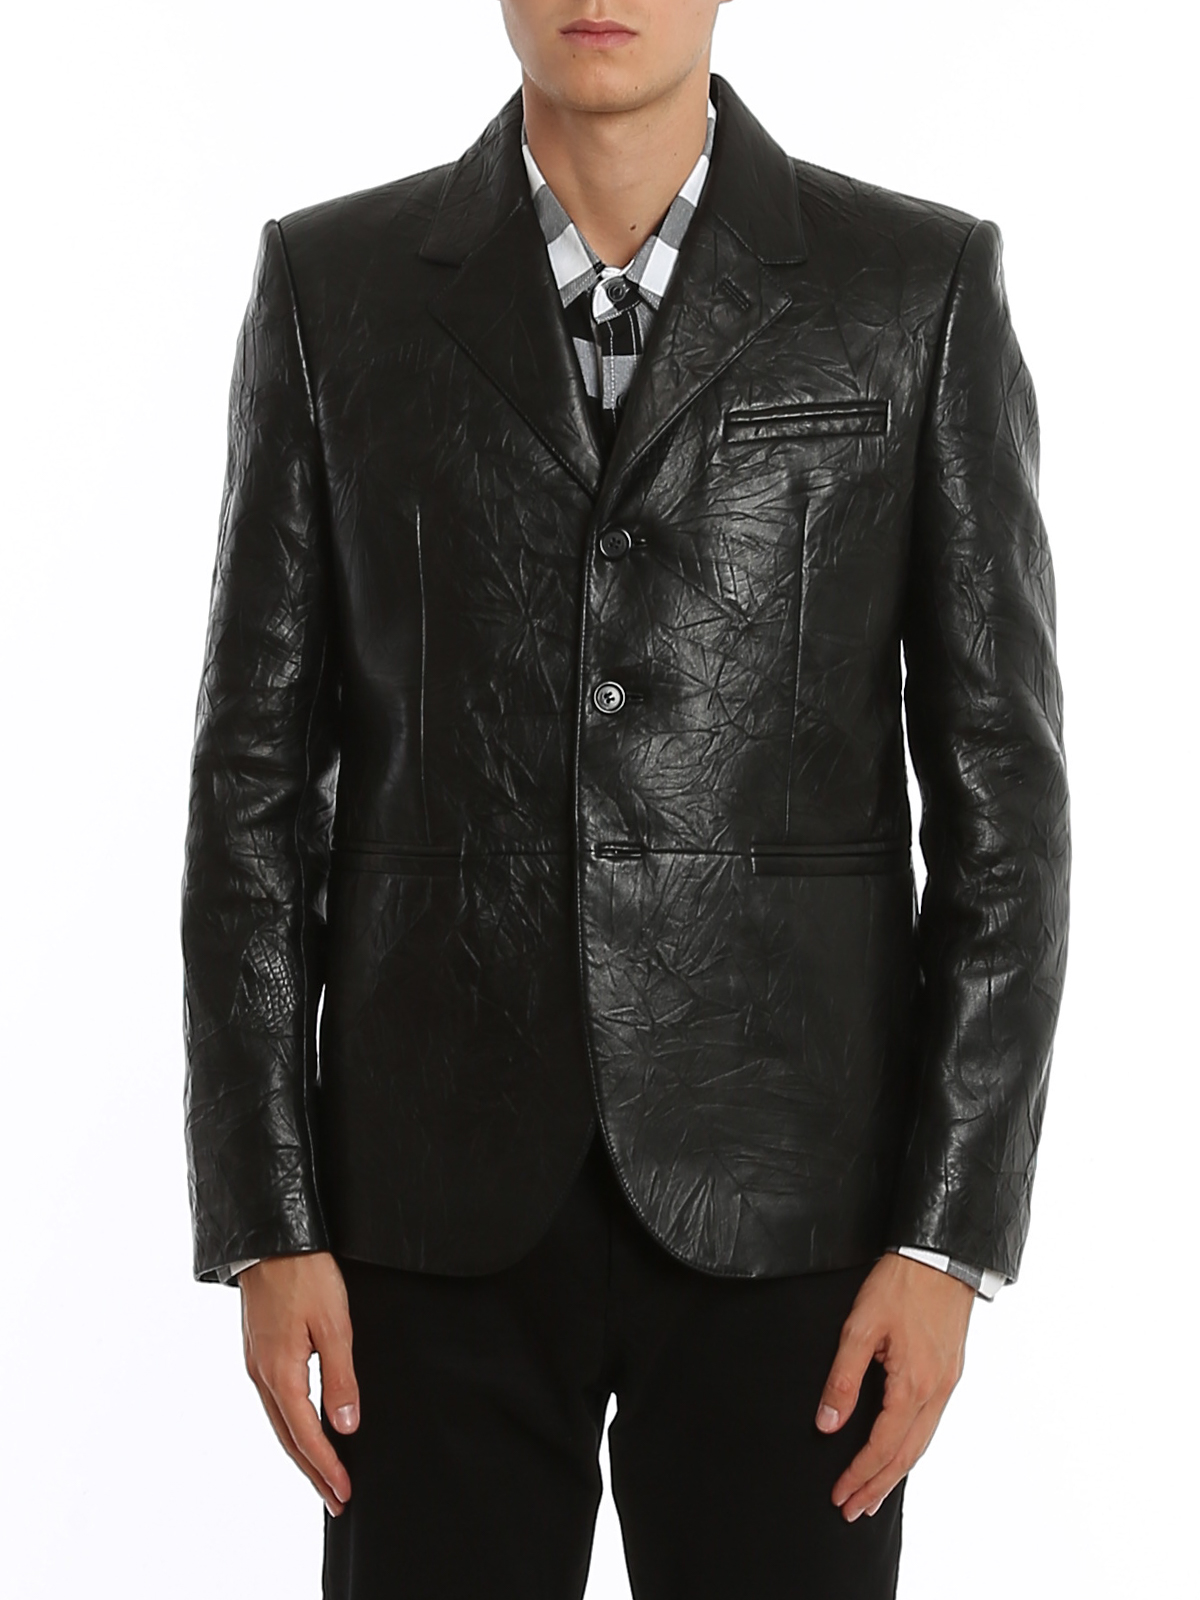 Leather jacket Saint Laurent - Wrinkled effect leather jacket ...